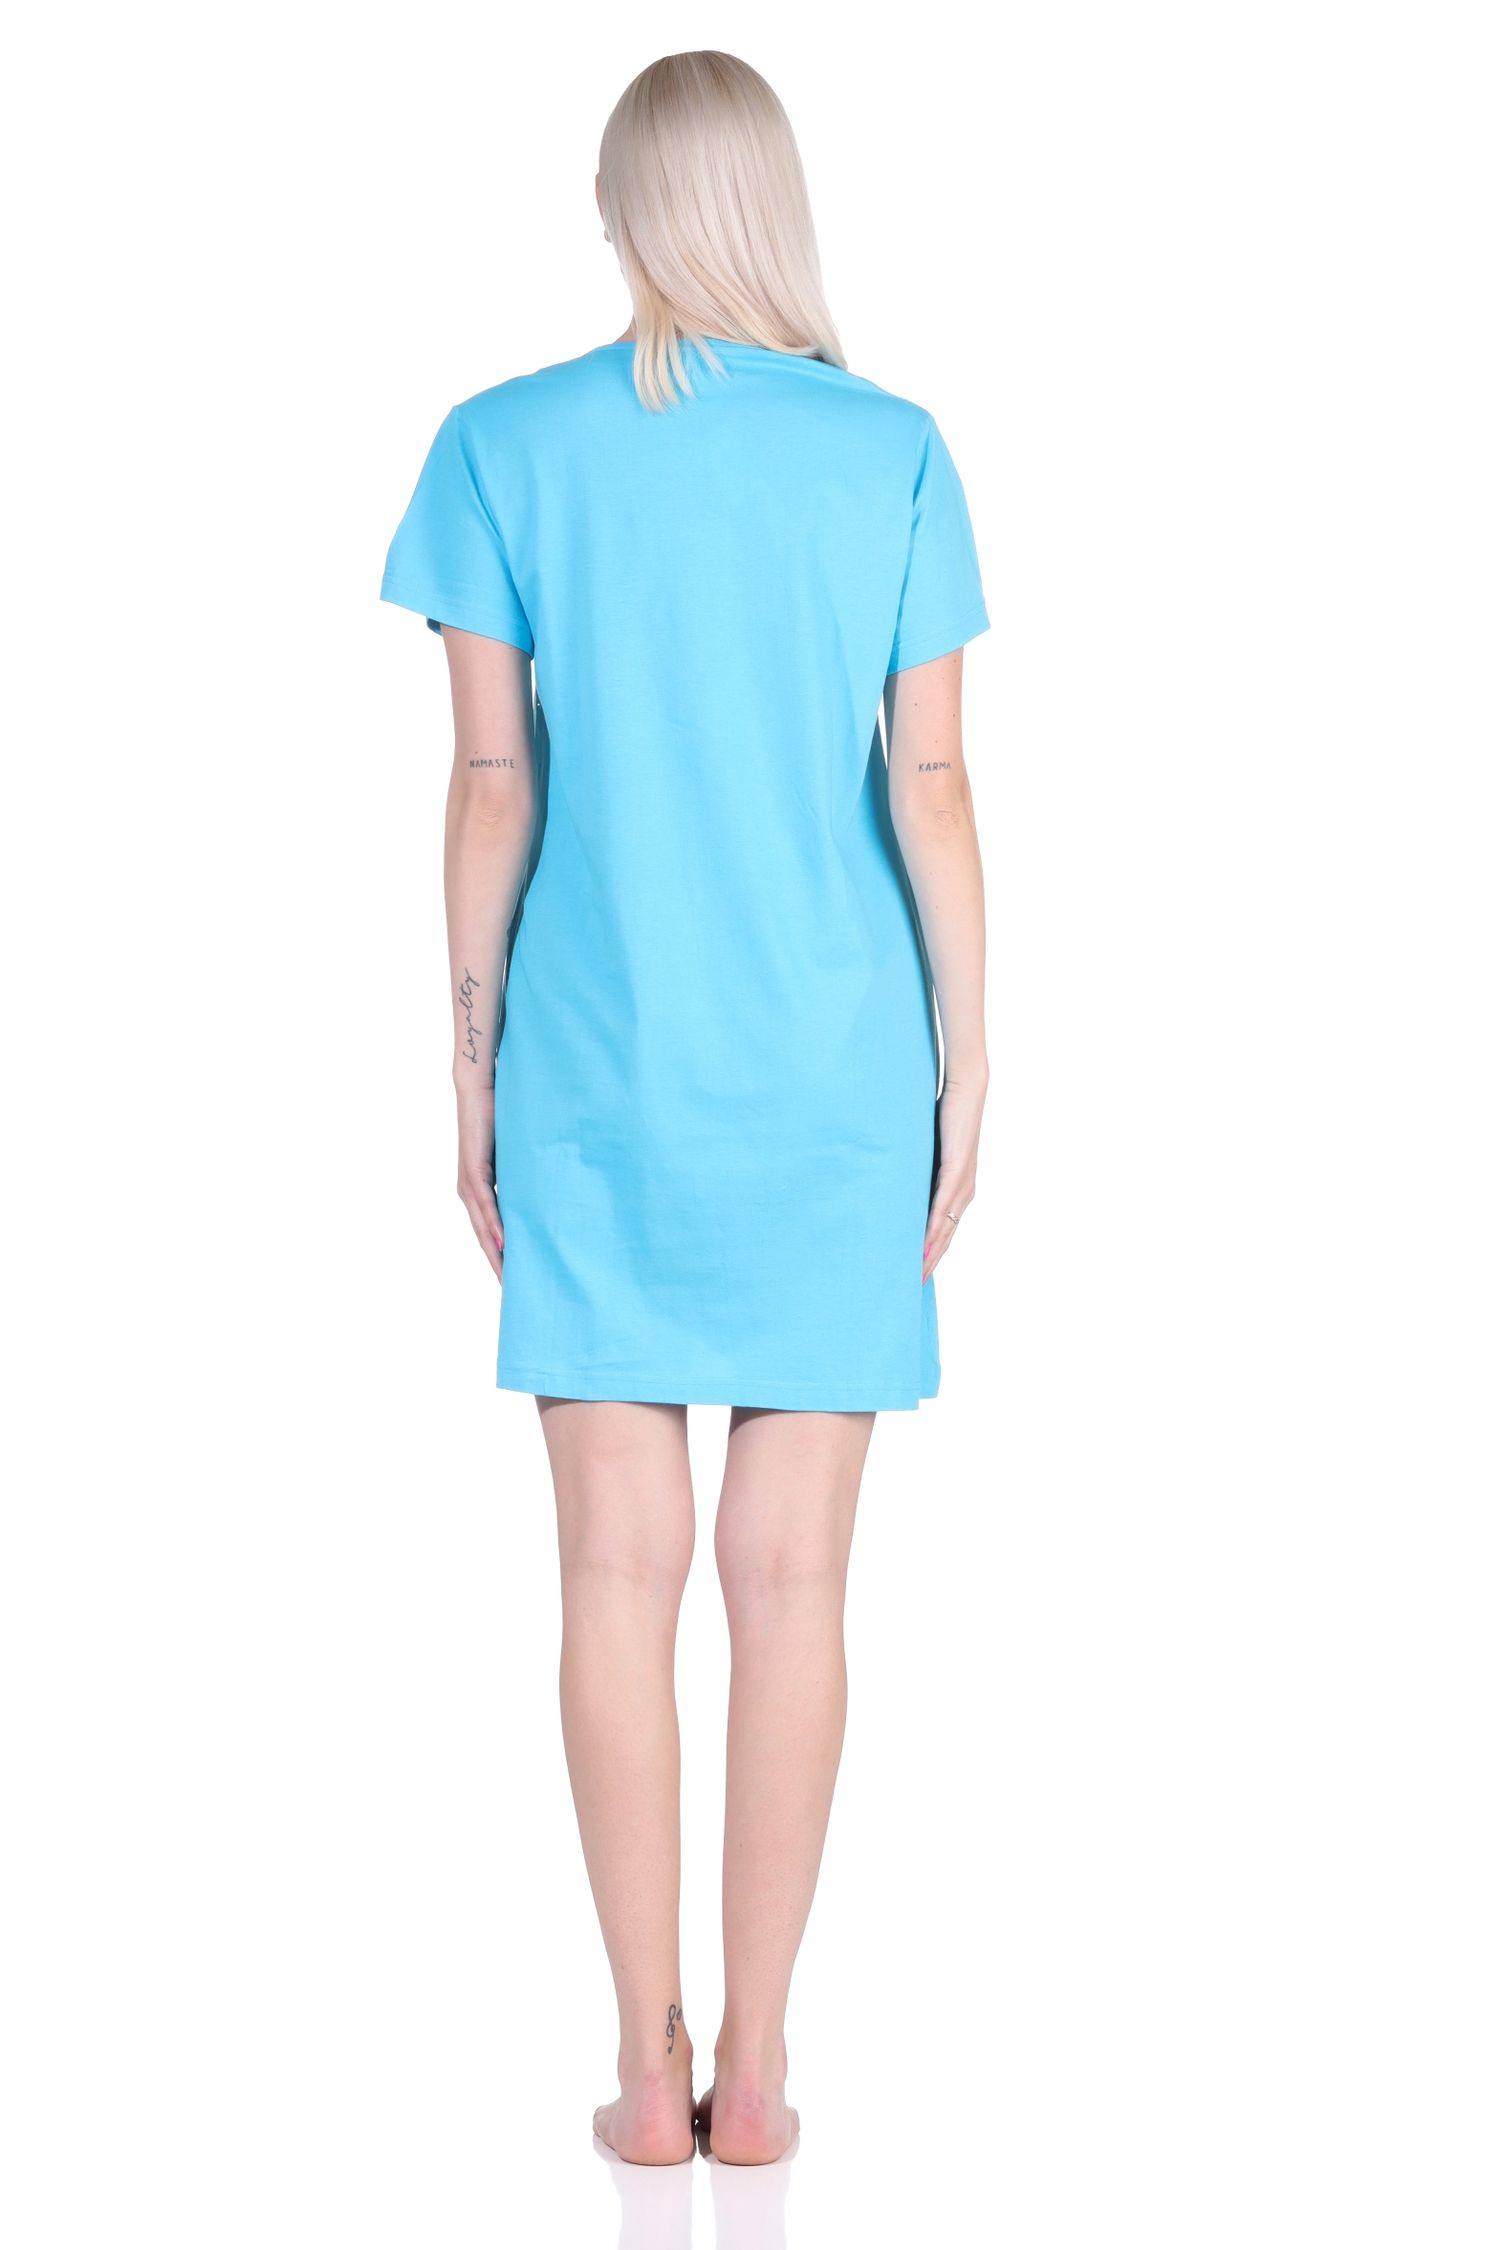 Damen 2er Pack kurzarm Nachthemd Schlafshirt in 2 tollen farbenfrohen Designs - 65137